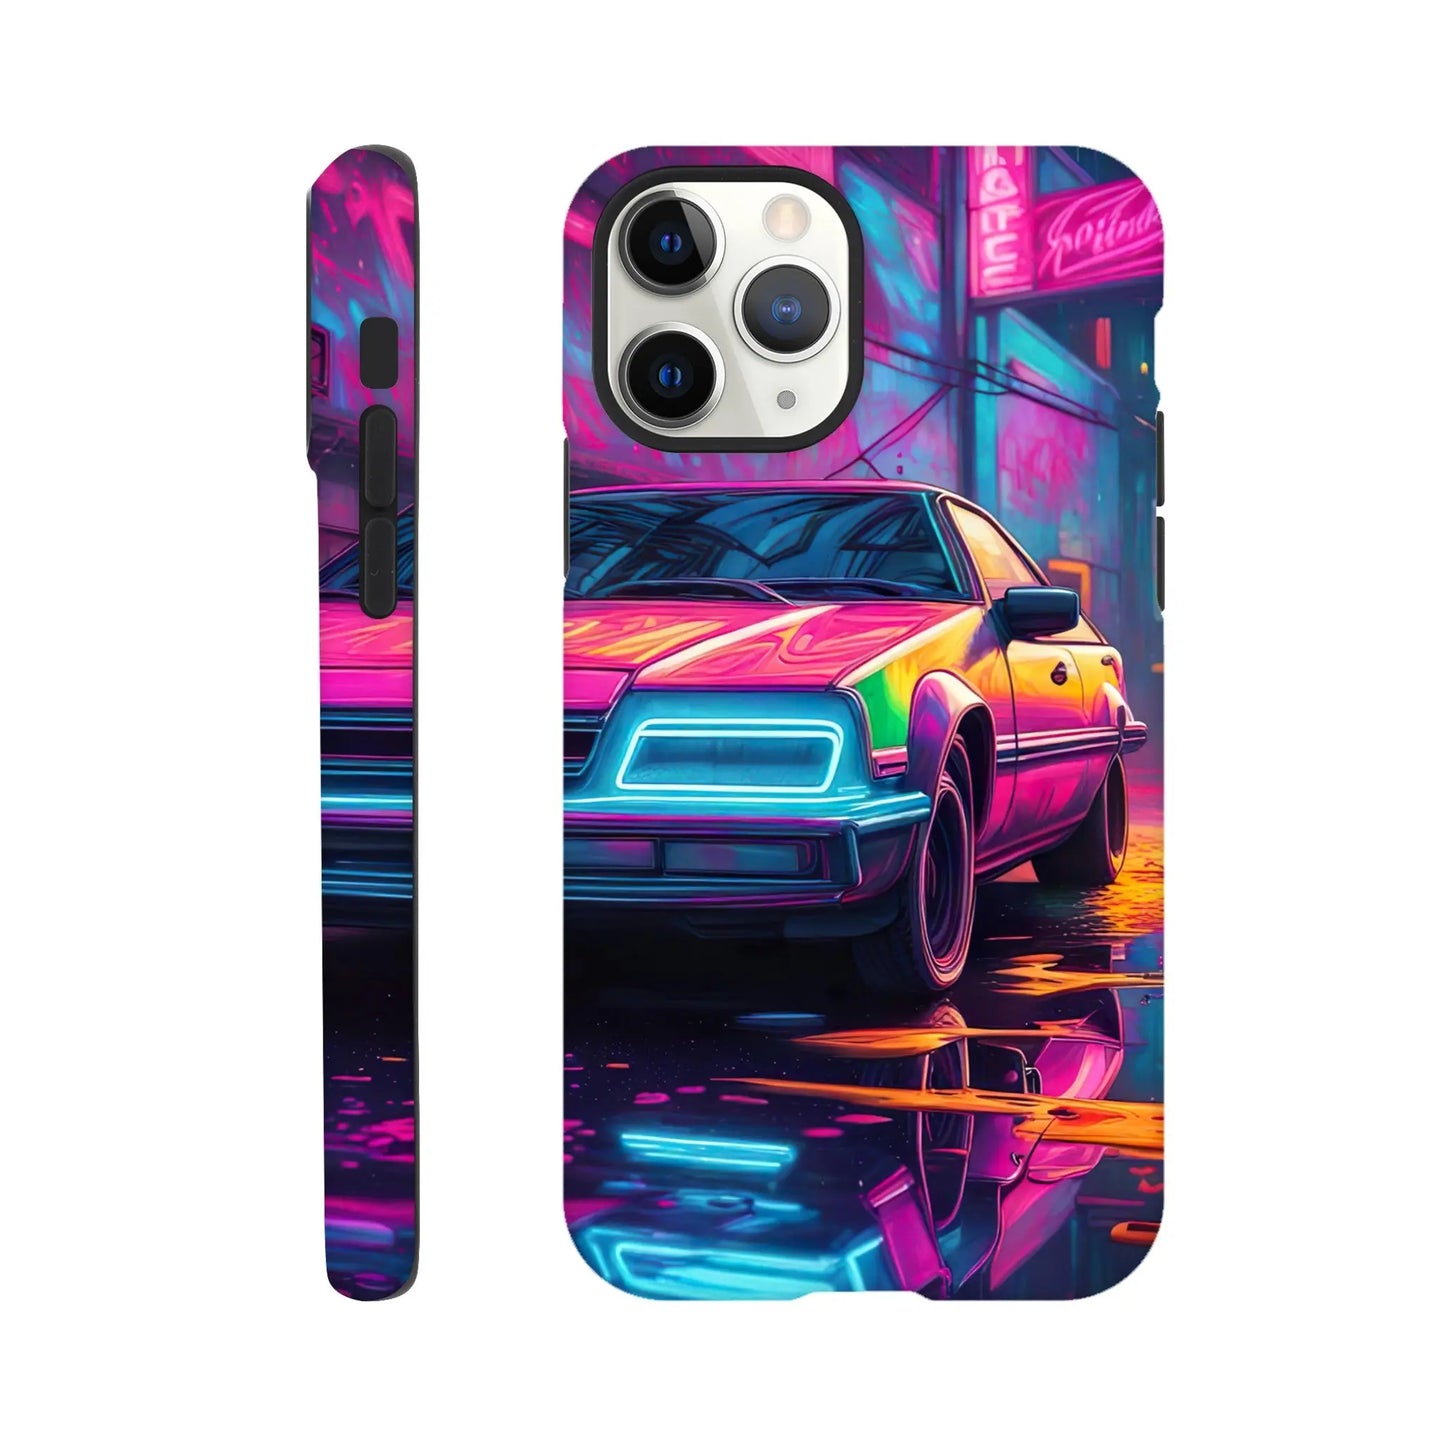 Smartphone-Hülle "Hart" - Retro Auto - Neon Stil, KI-Kunst RolConArt, Neon, iPhone-11-Pro